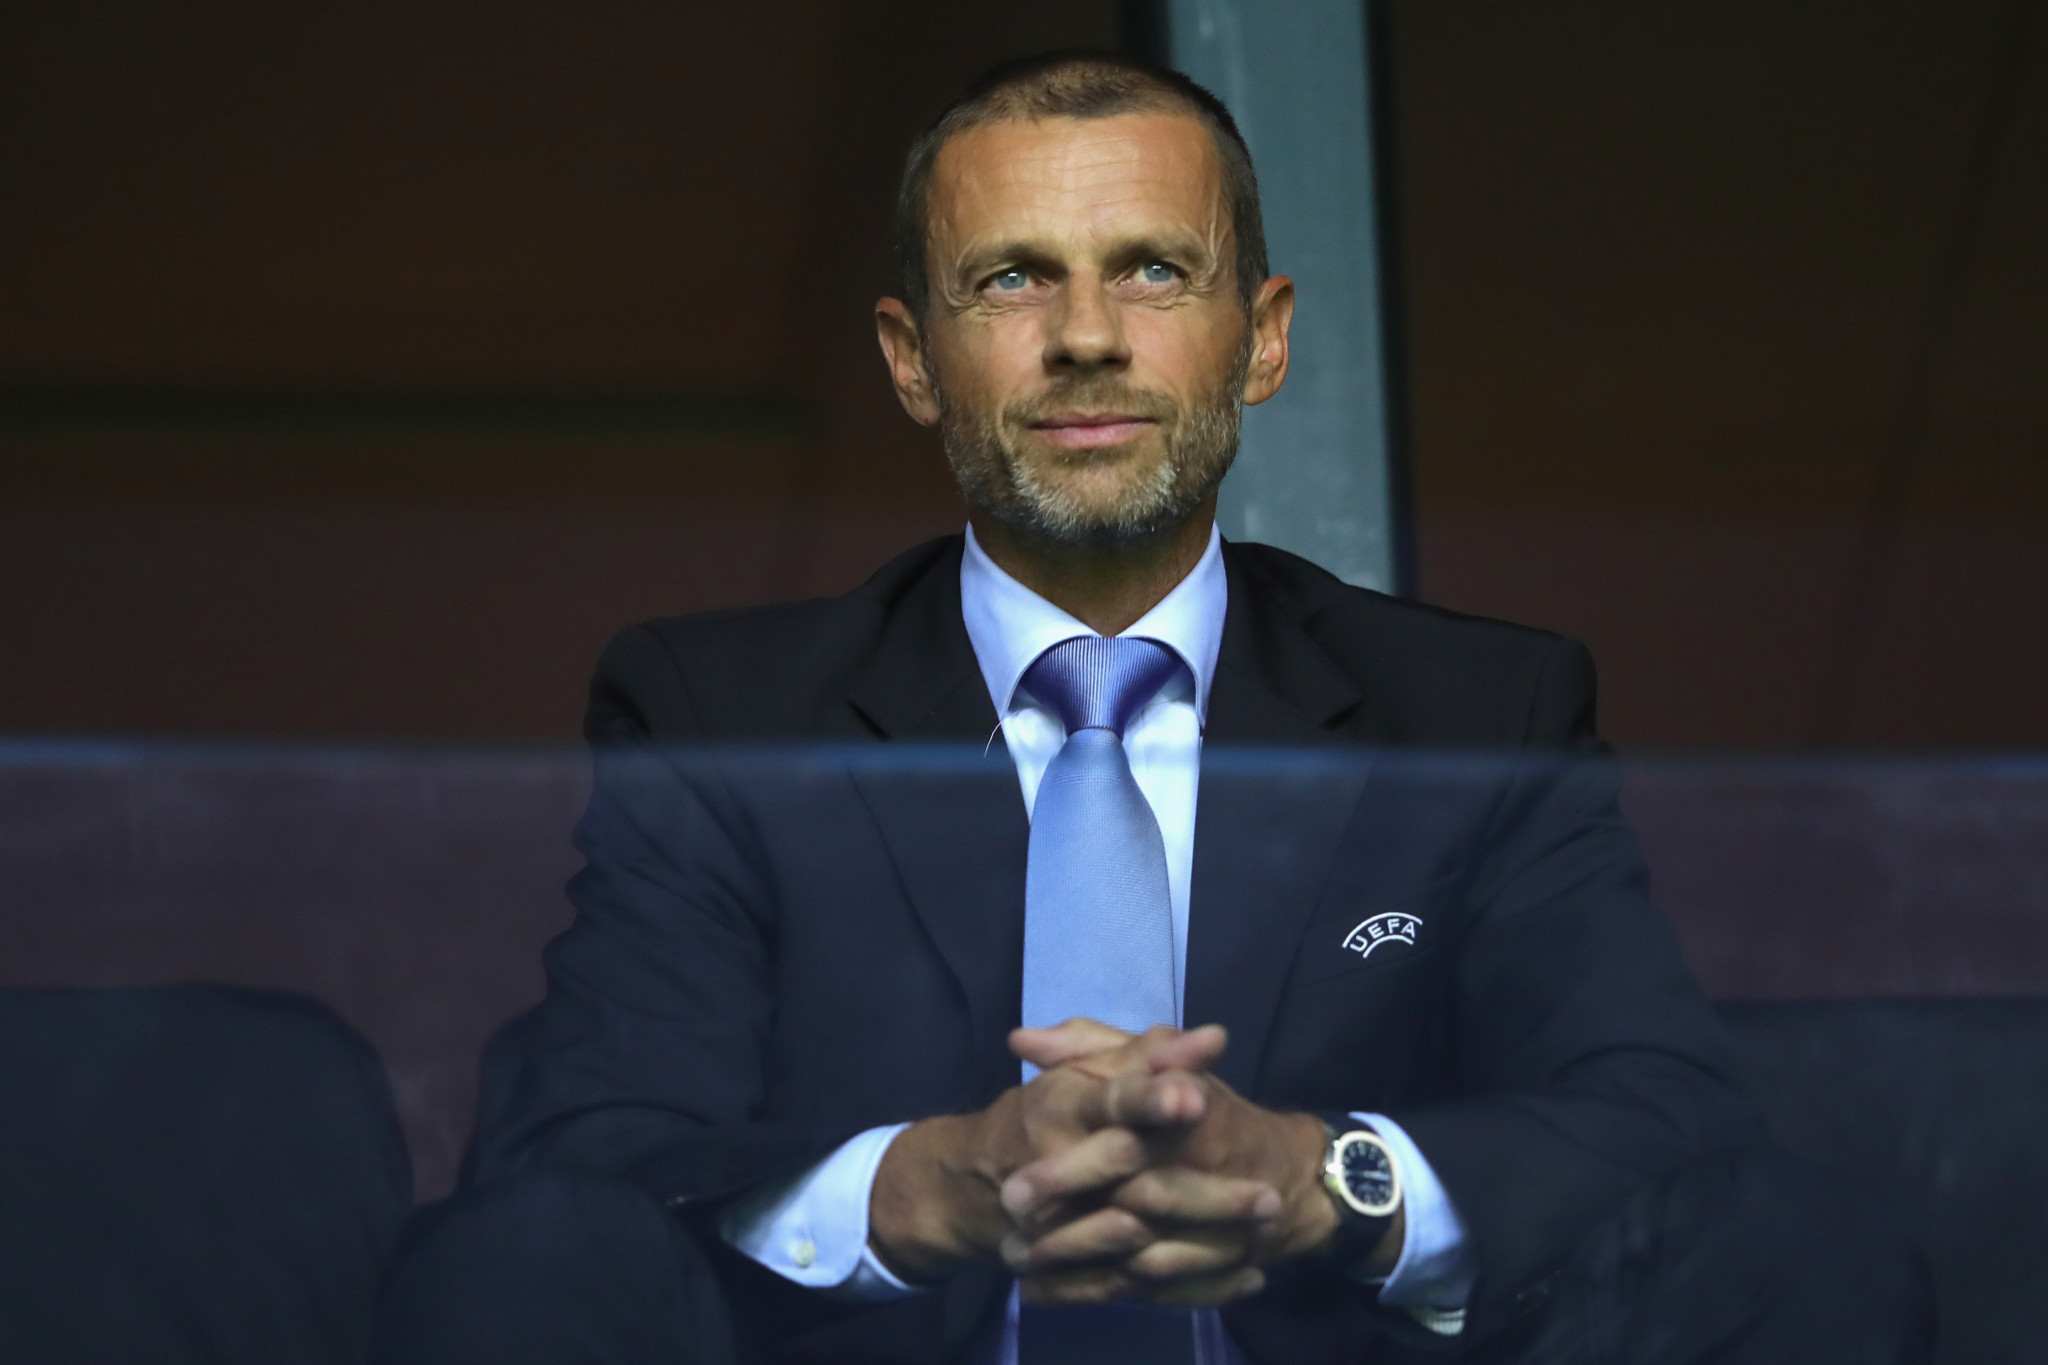 Čeferin unopposed for re-election as UEFA President